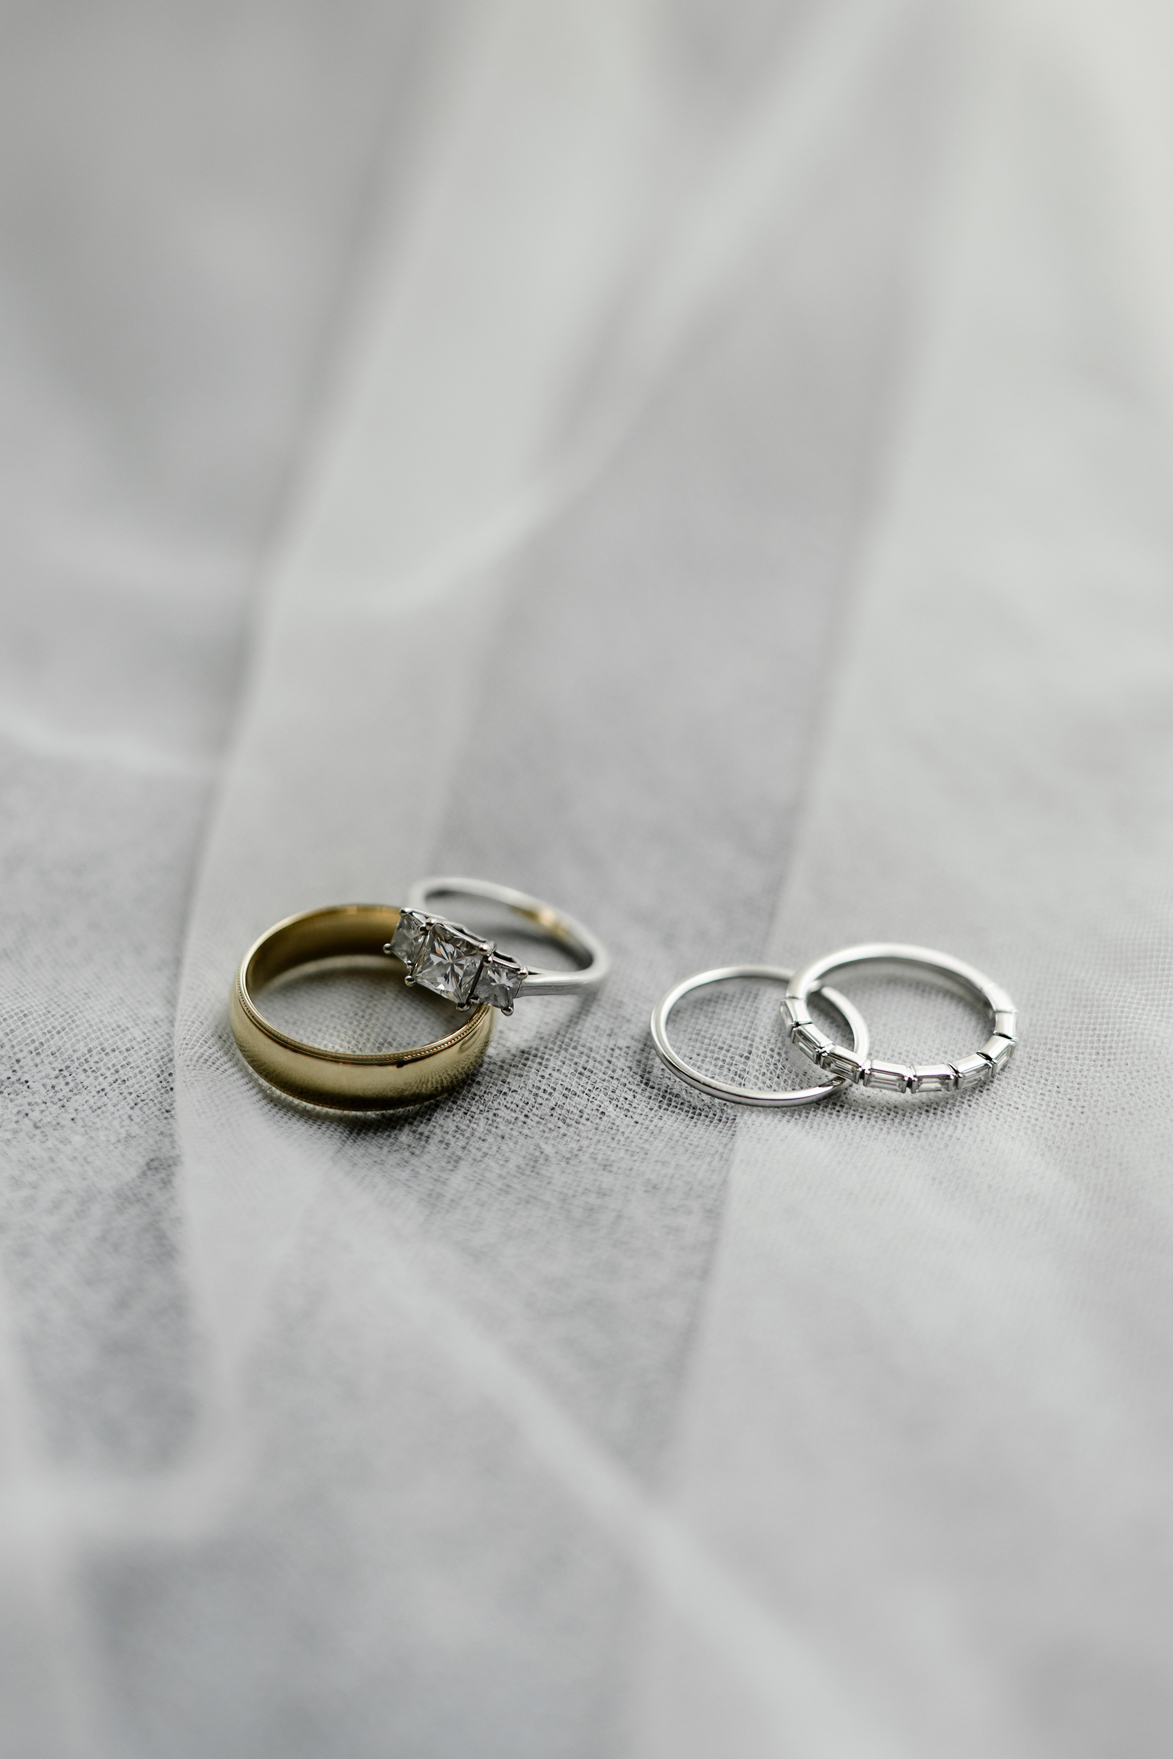 wedding rings on a veil